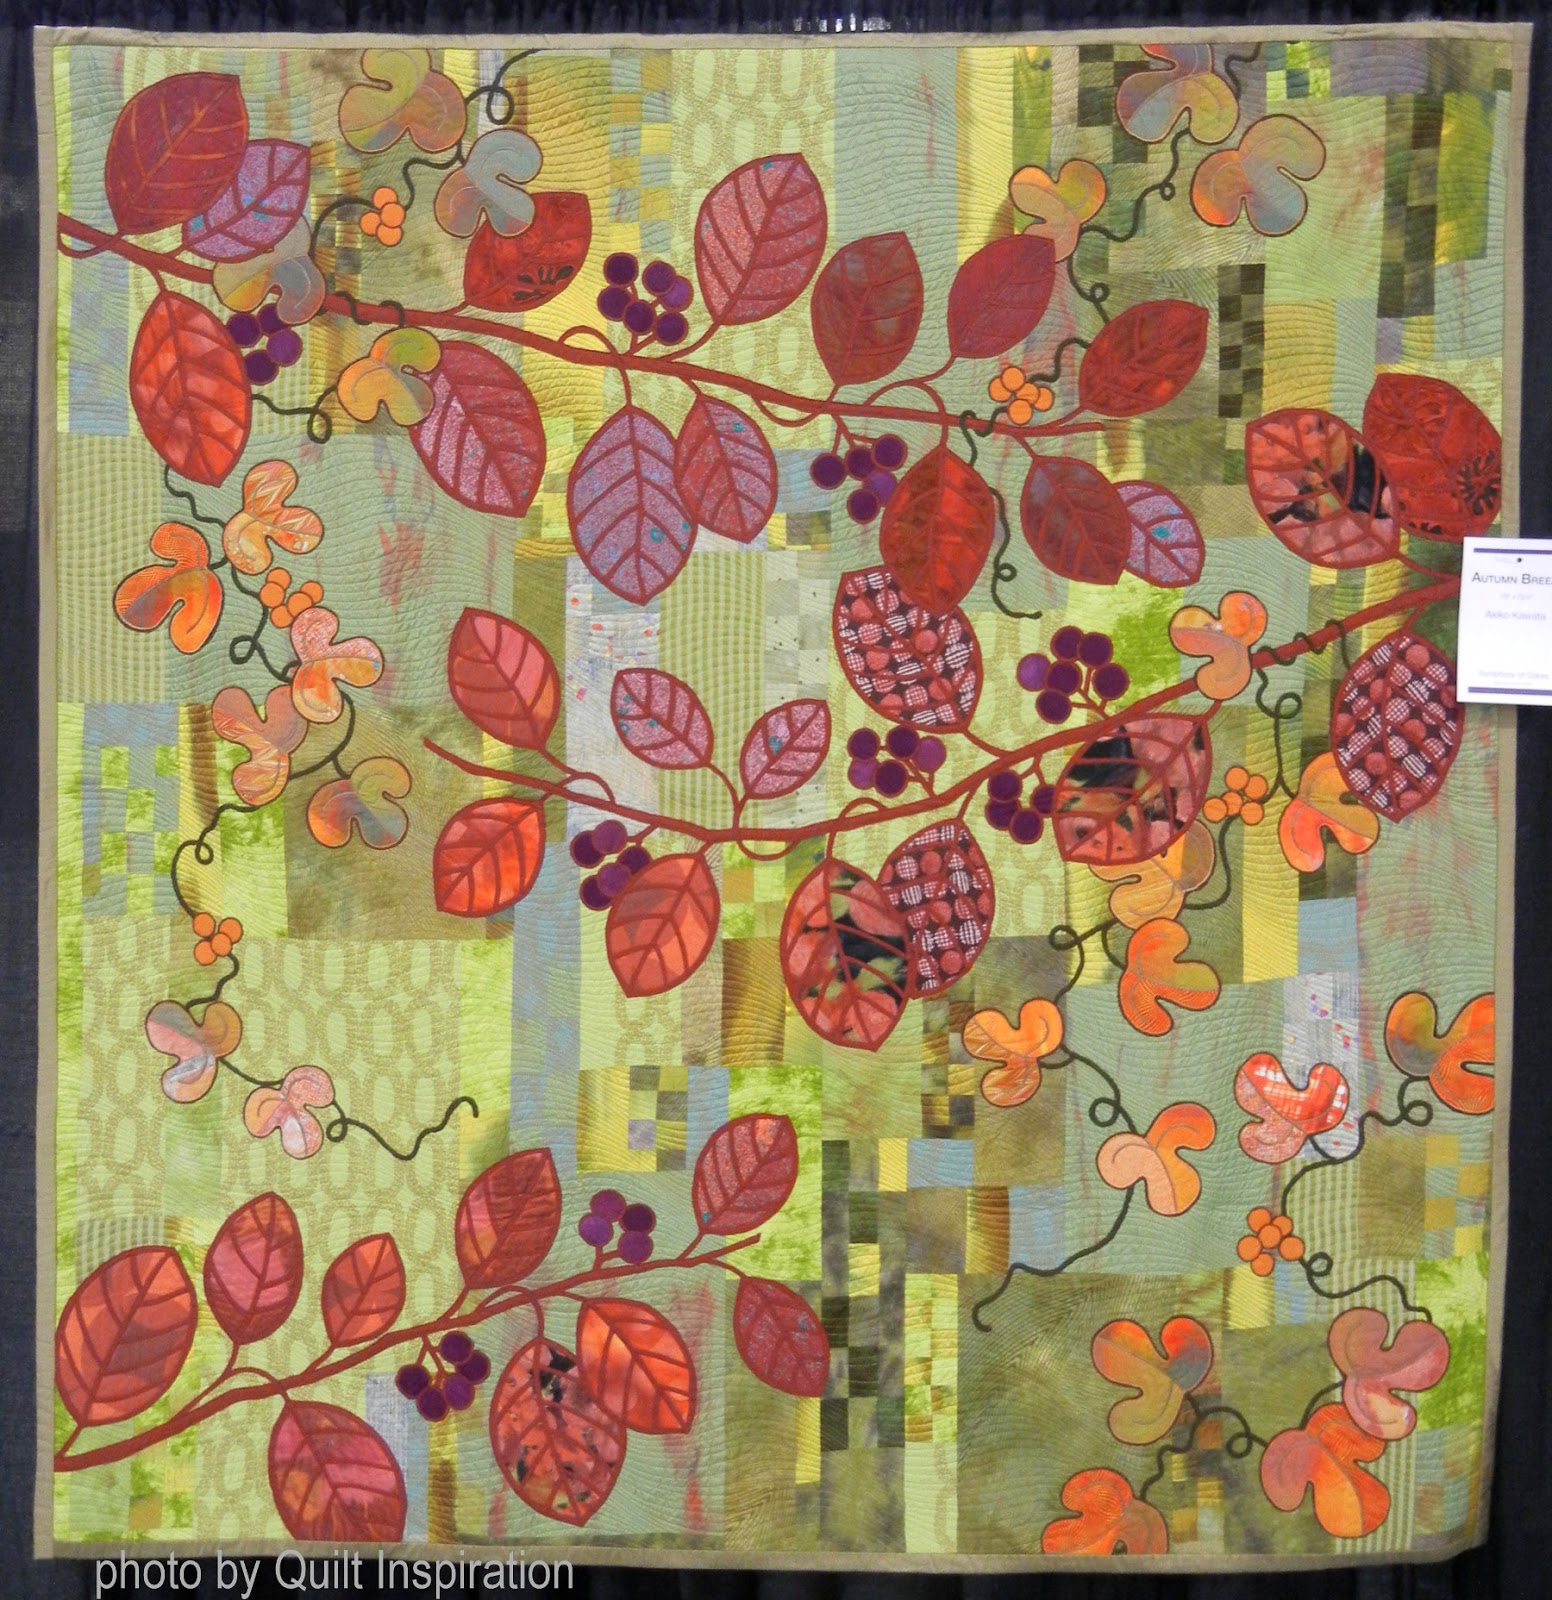 Spiksplinternieuw Symphony of Colors: Japanese quilts | Quilt Inspiration | Bloglovin' DI-79